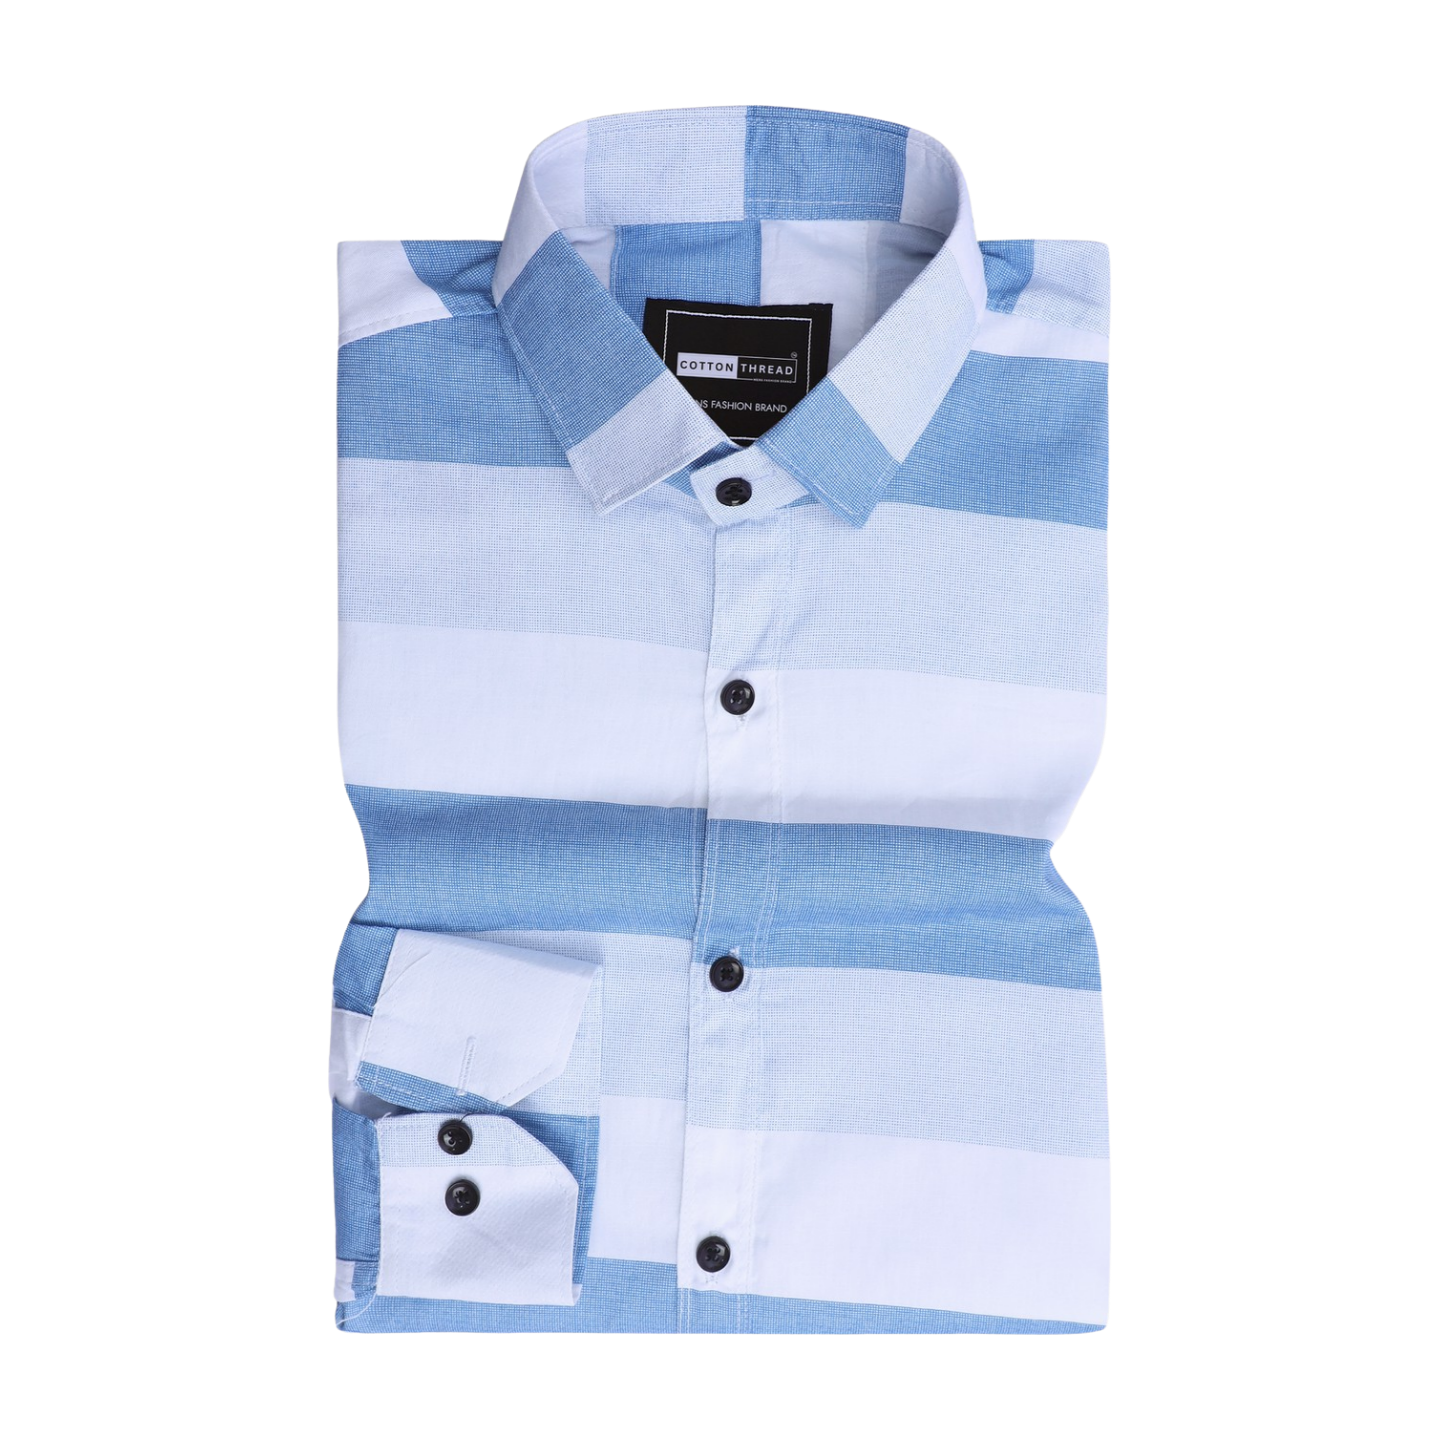 Men's Premium Formal Full Sleeve Light Blue Striped Shirt By Cotton Thread (STR-014)